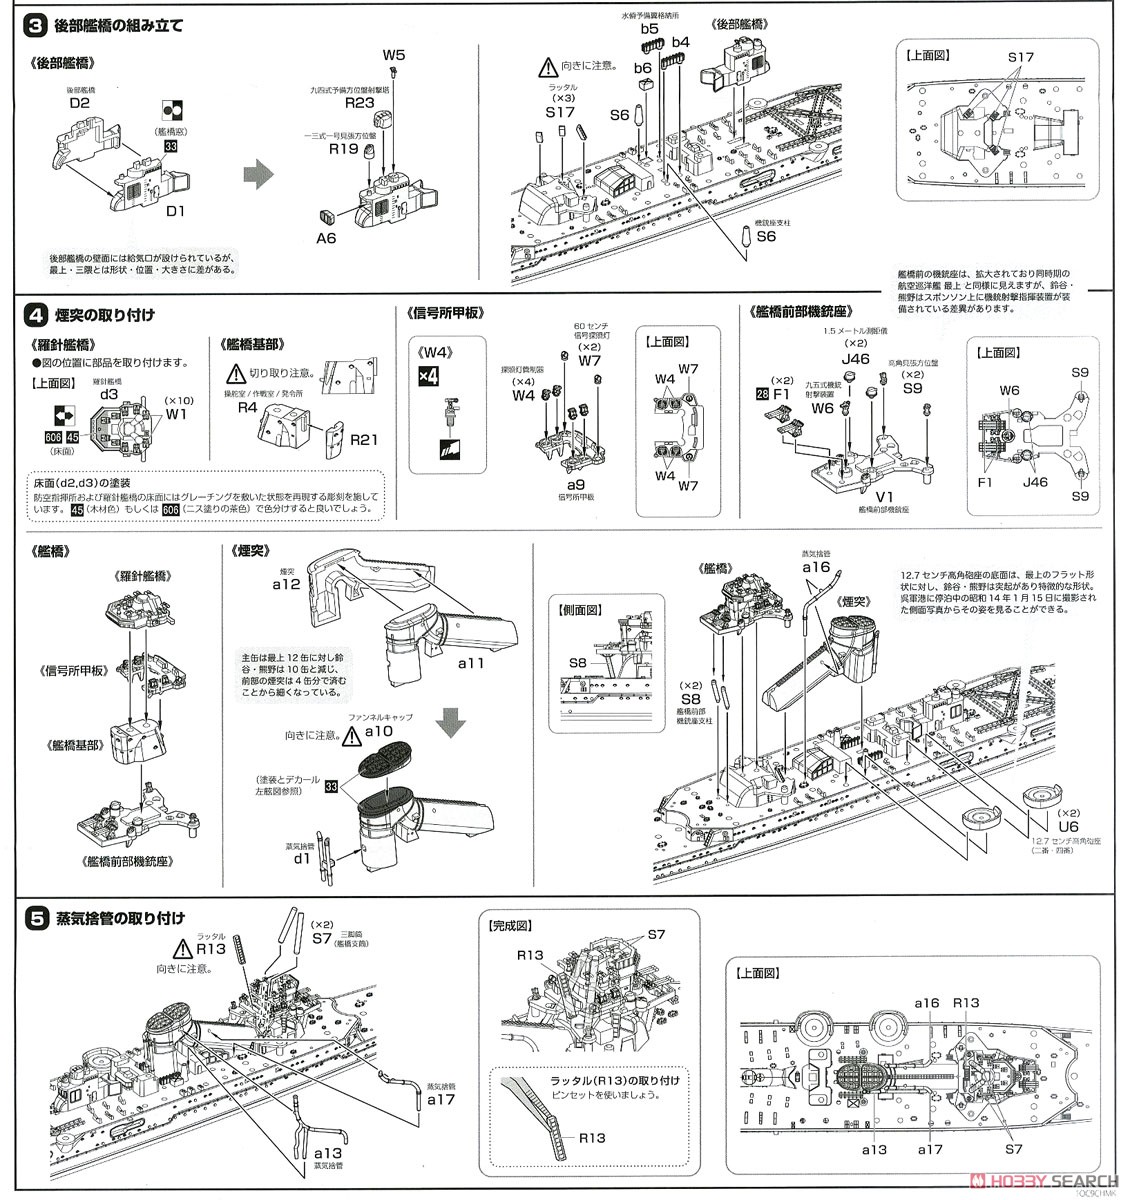 日本海軍重巡洋艦 鈴谷 (昭和19年/捷一号作戦) (プラモデル) 設計図2